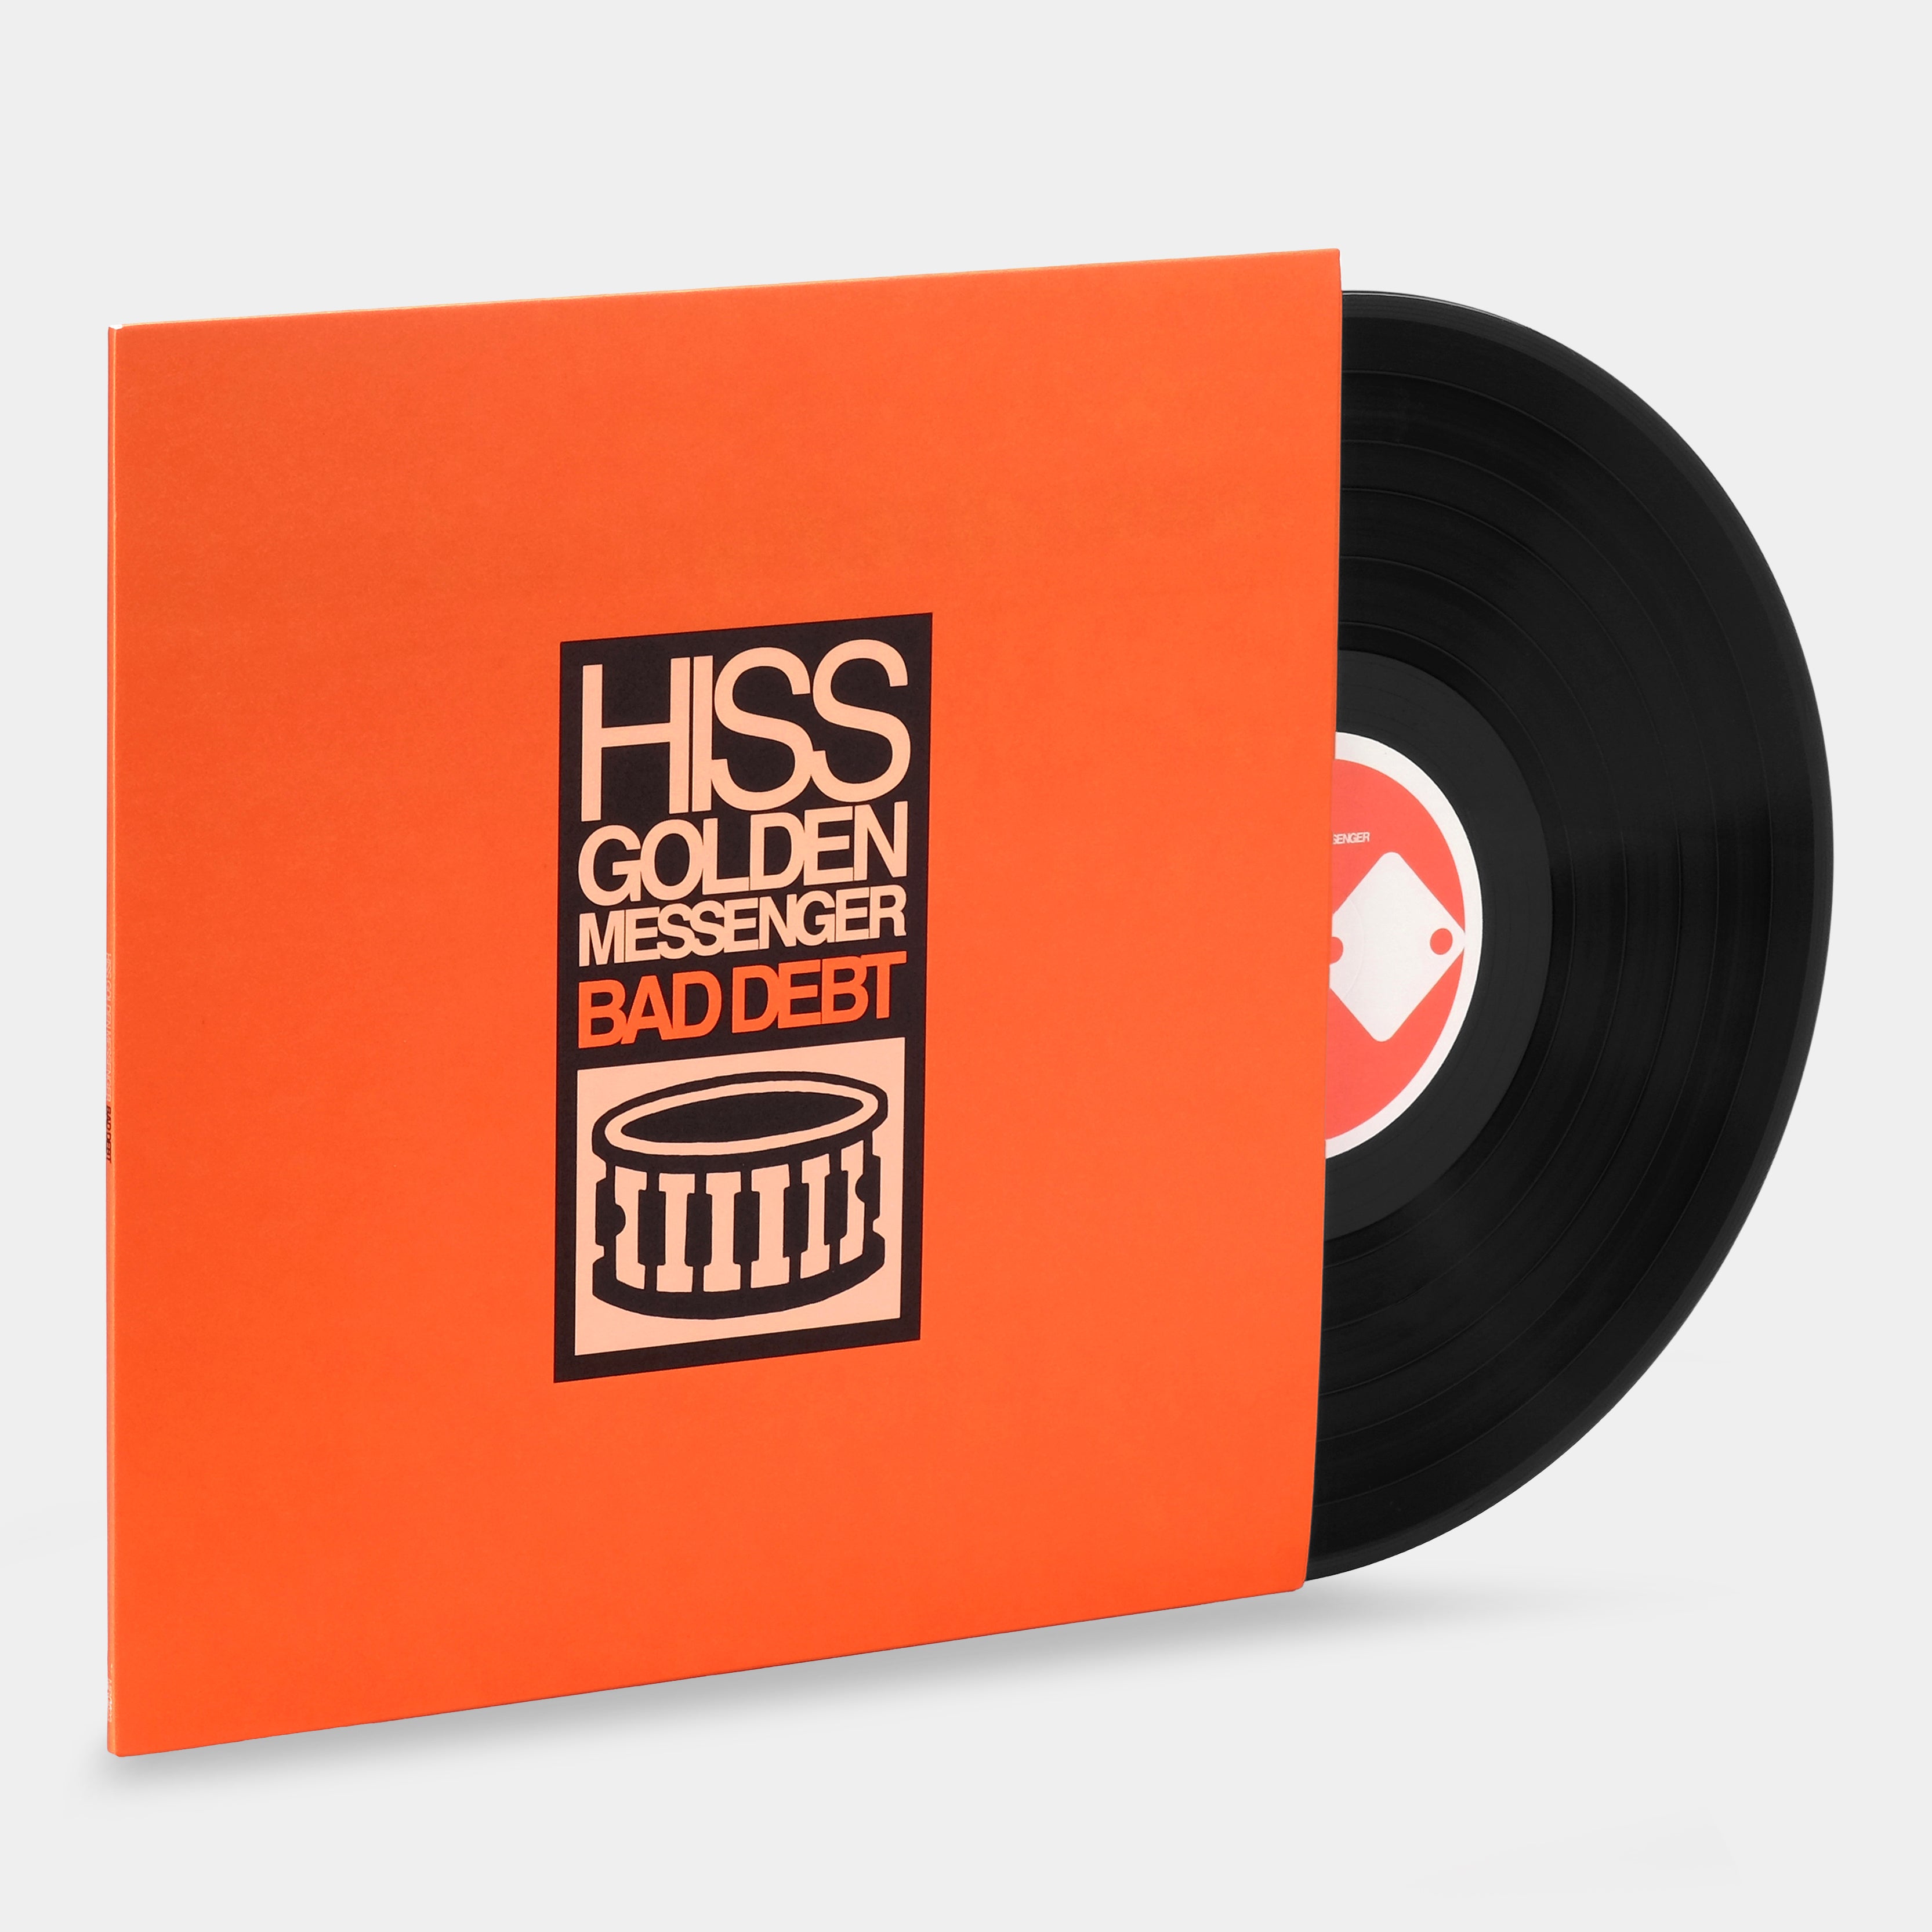 Hiss Golden Messenger - Bad Debt LP Vinyl Record